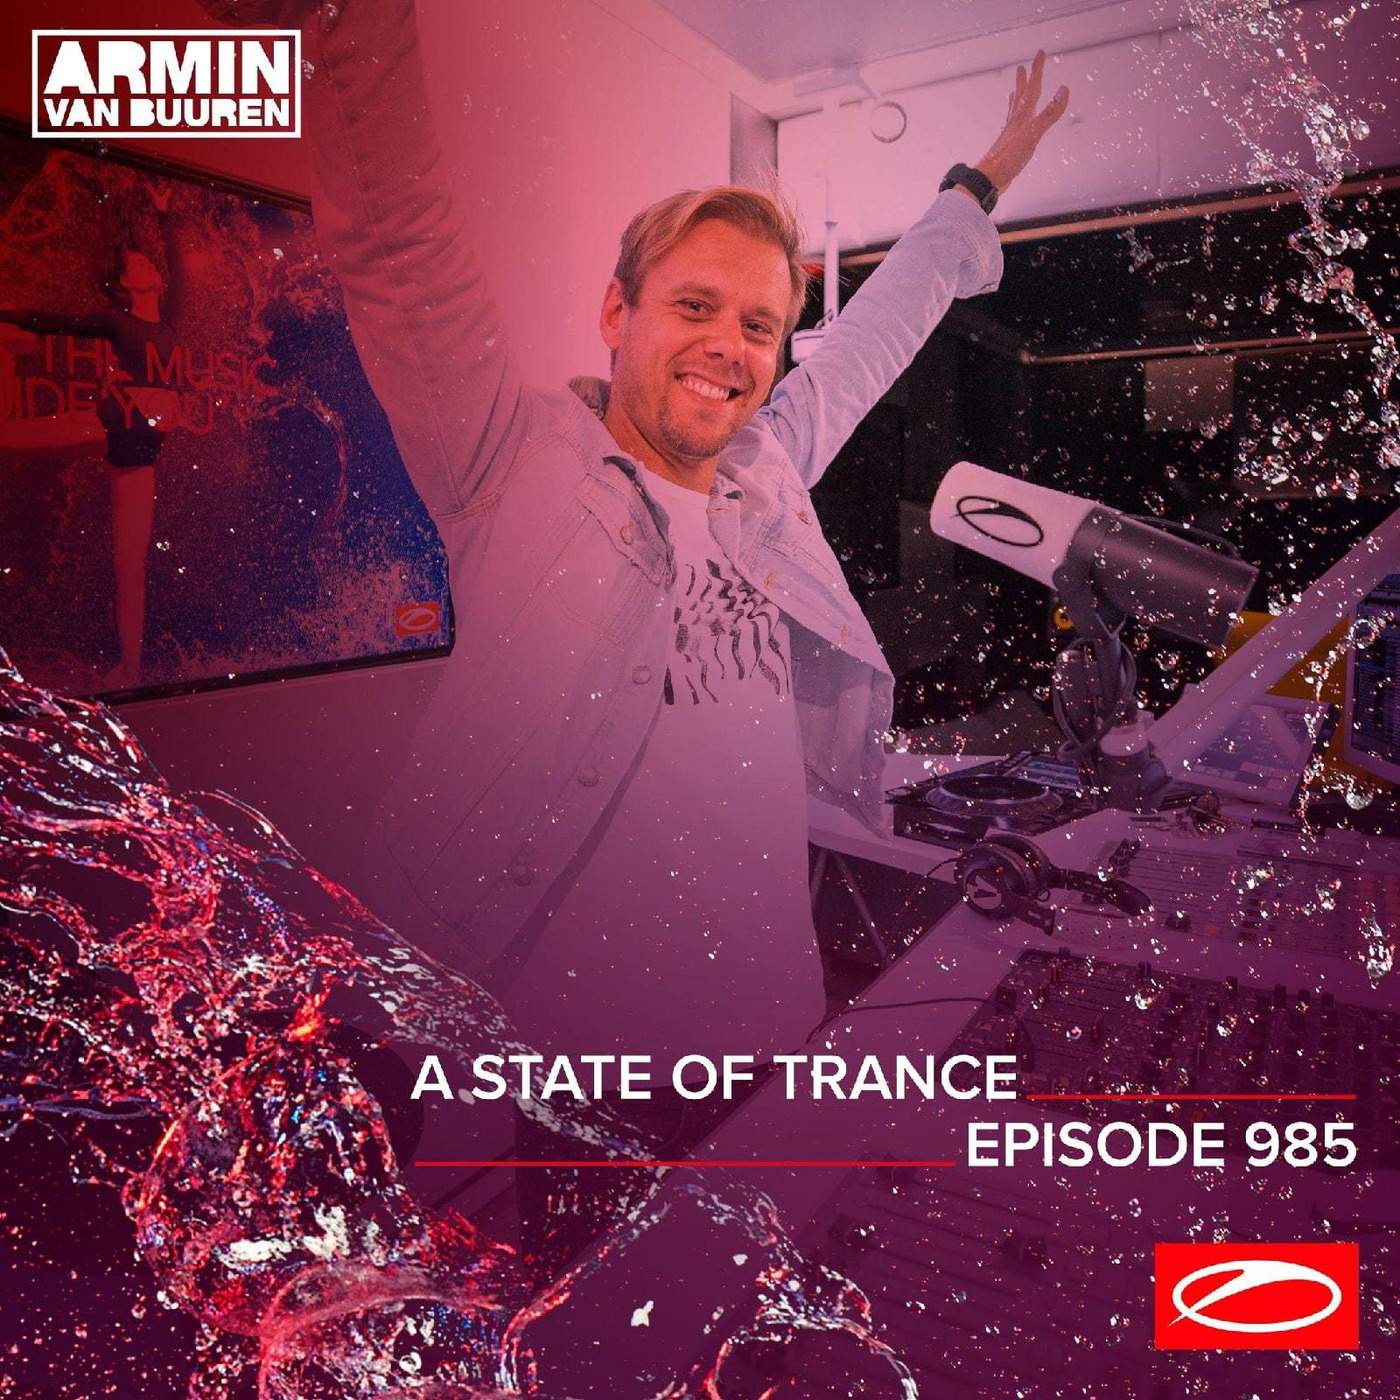 Armin van Buuren - A State of Trance Episode 985 (08-10-2020)